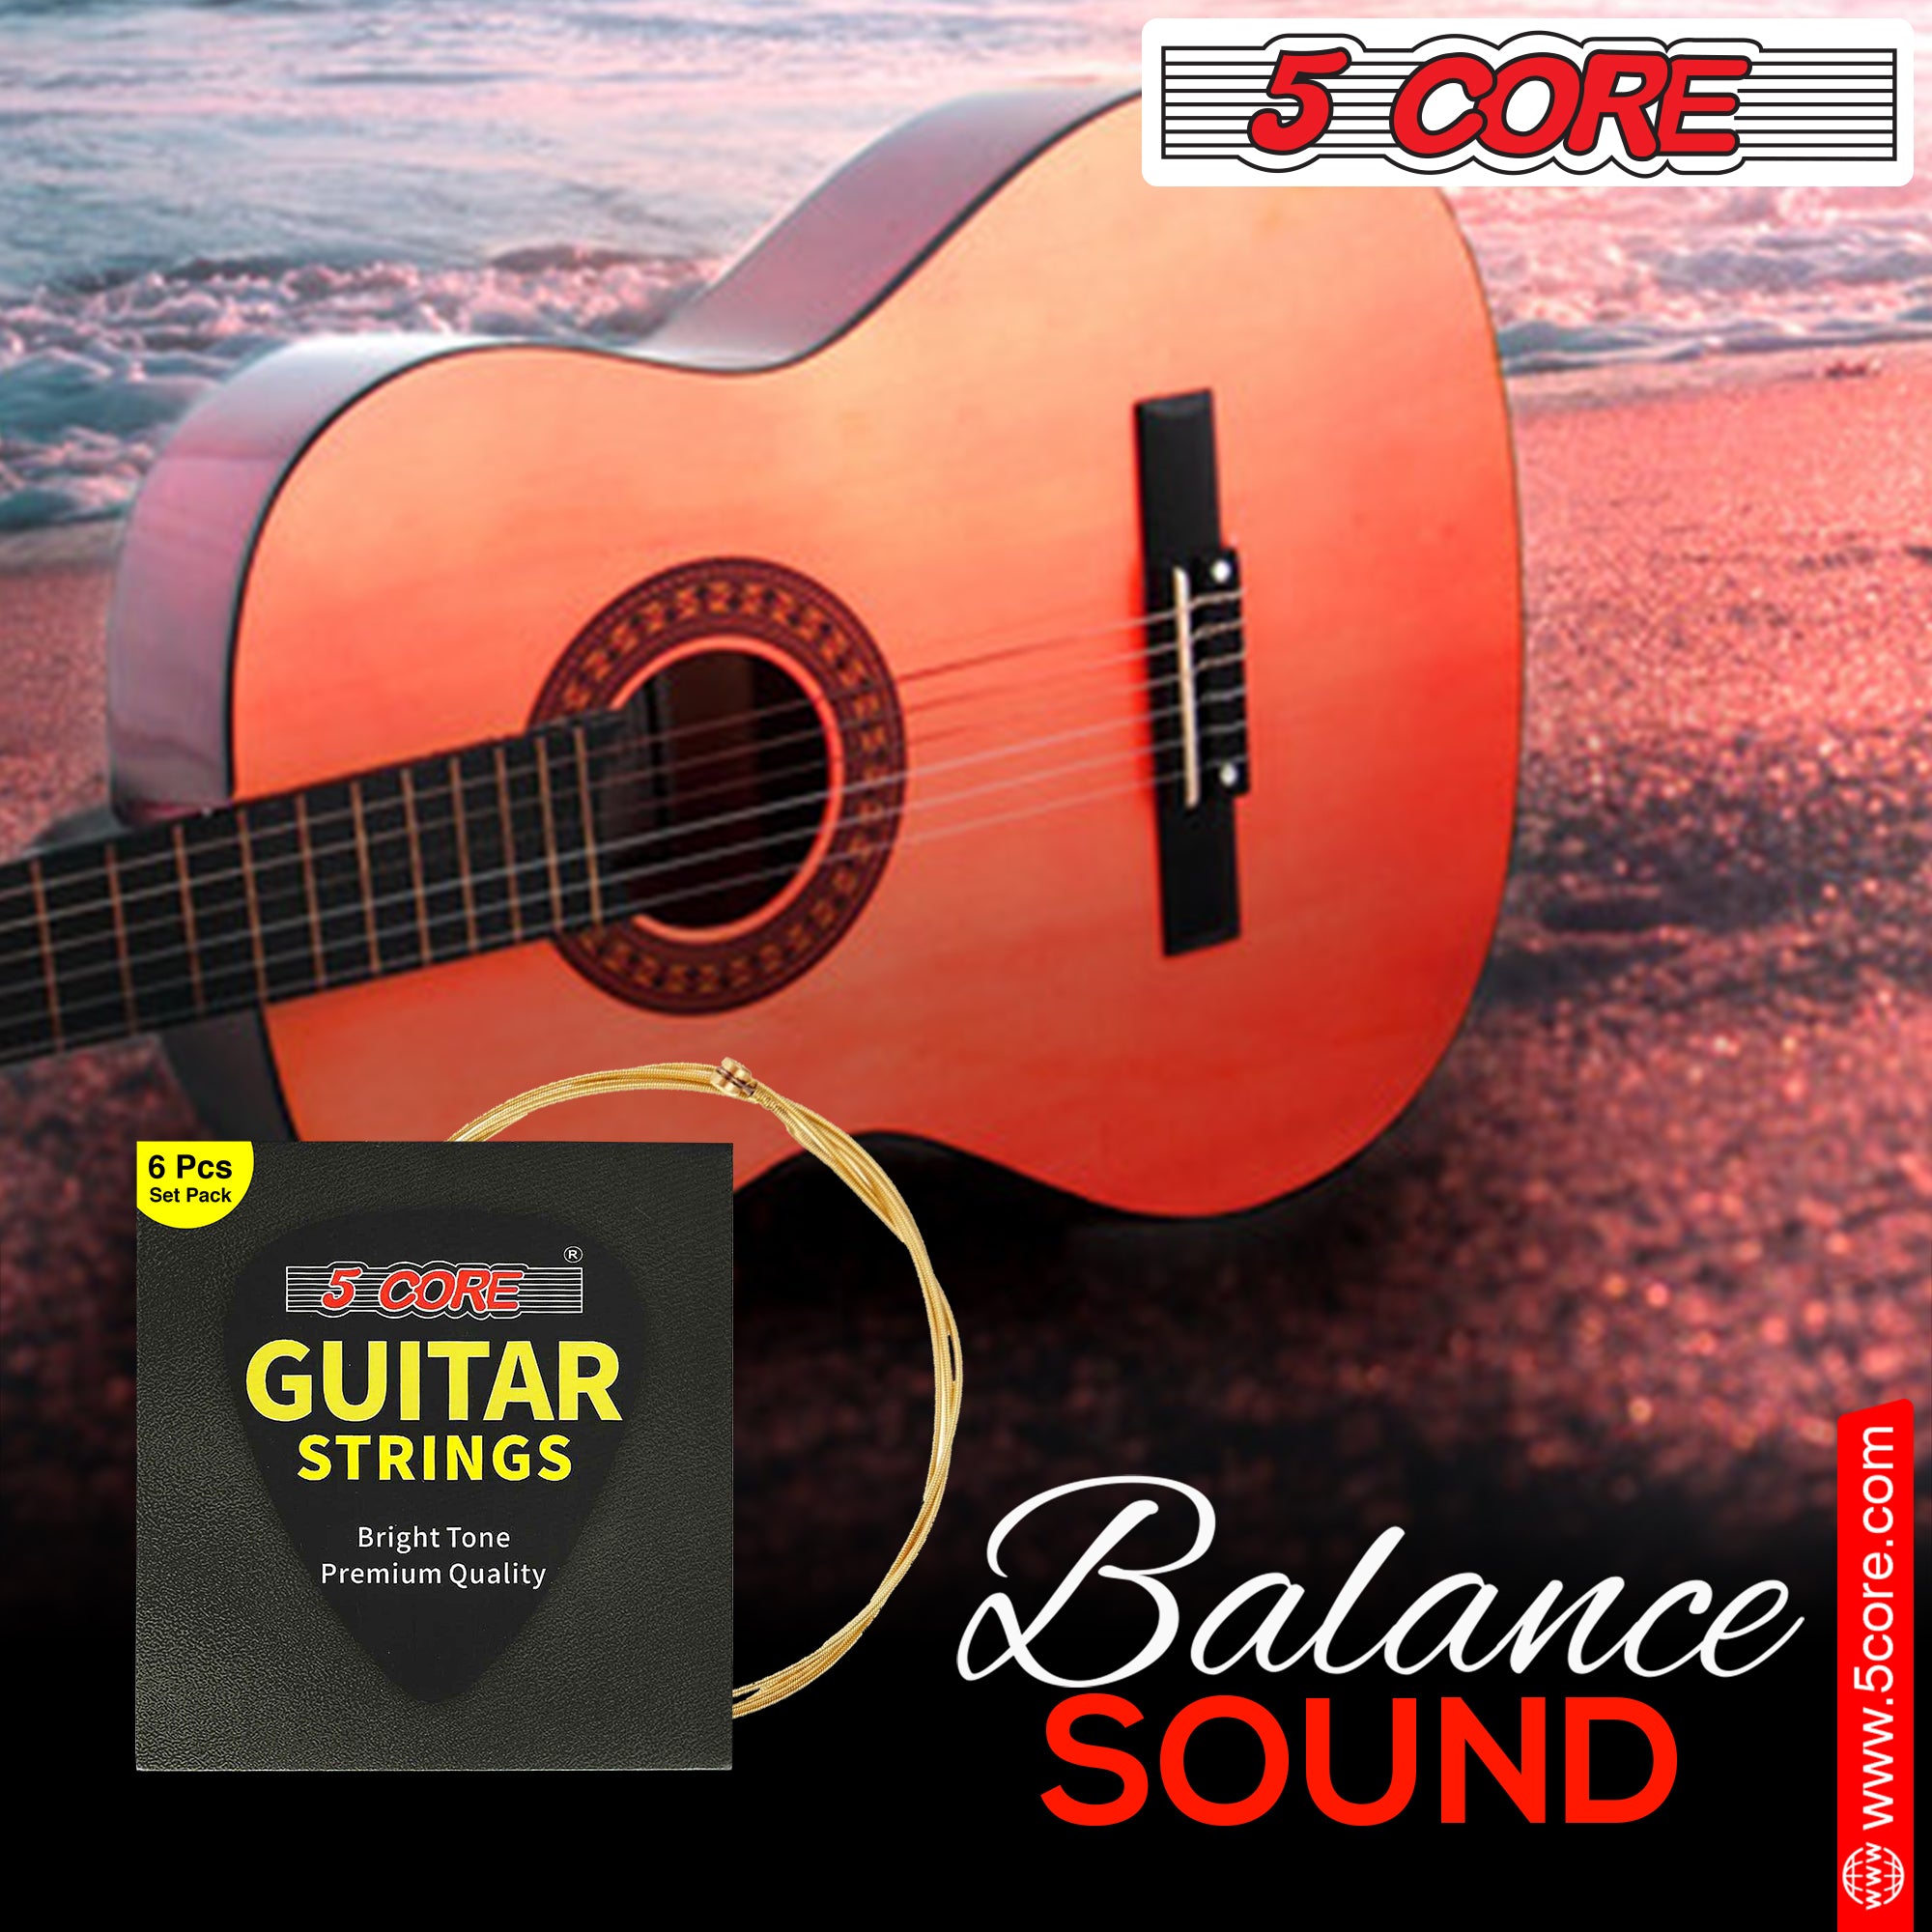 5 Core Guitar Strings • 0.010-0.047 Steel Gauge Heavy Duty w Bright Tone 6 String Acoustic Guitars